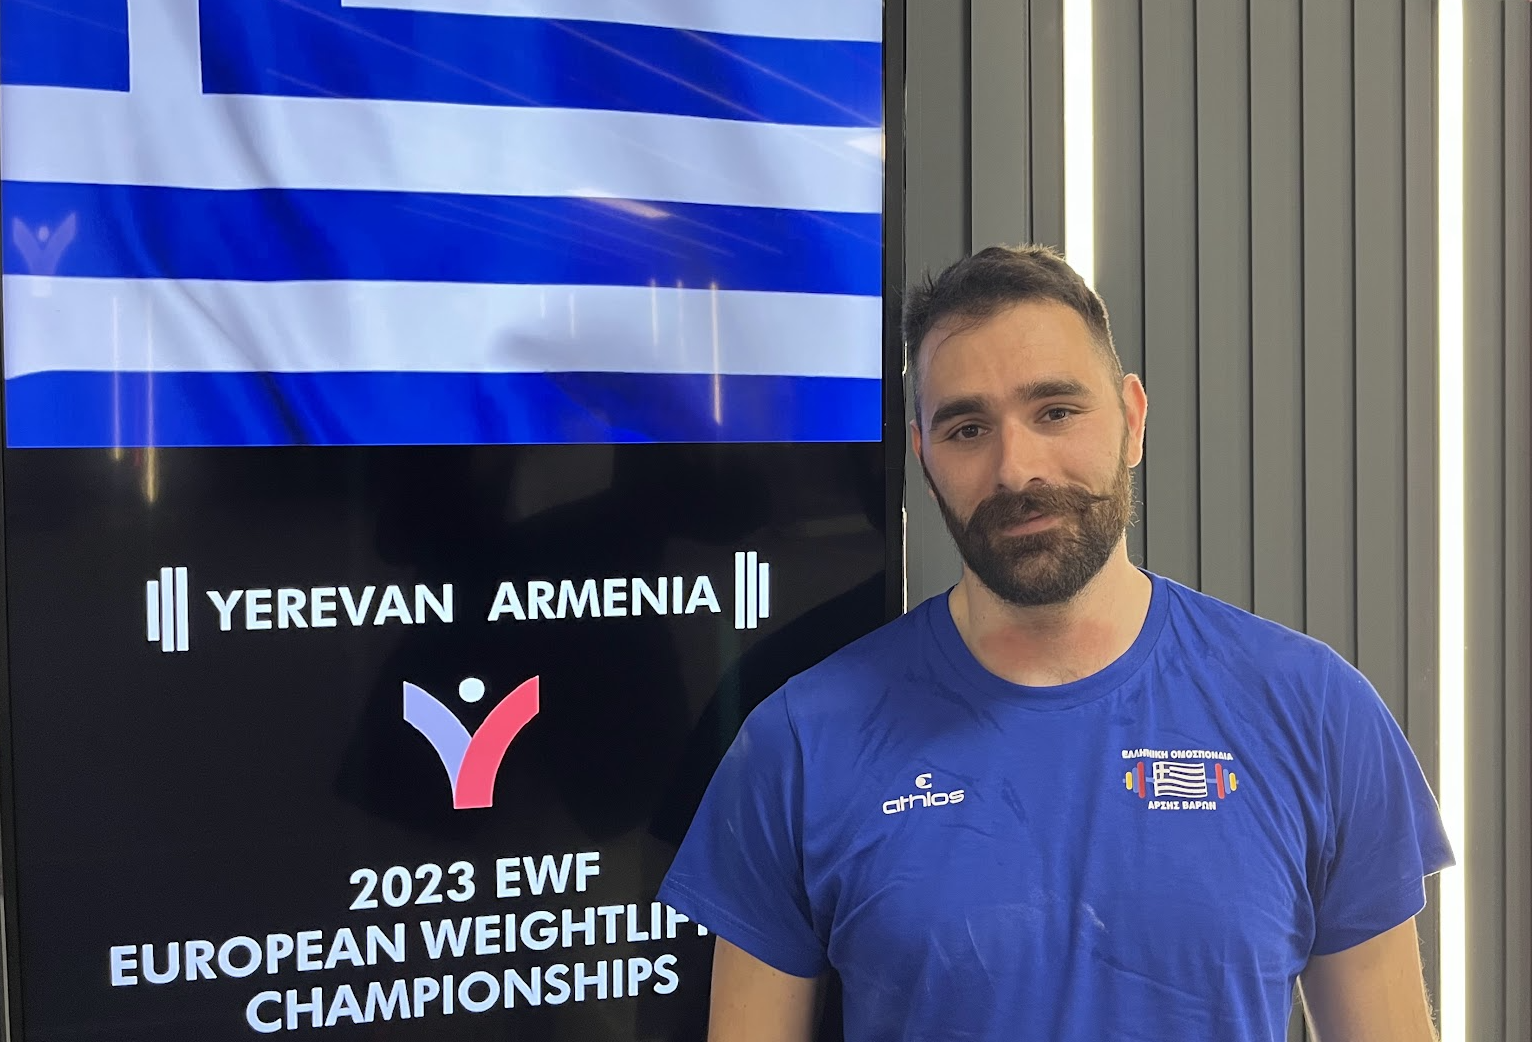 "Infinite love" puts Greek weightlifter Iakovidis back on path to Paris after Tokyo tears